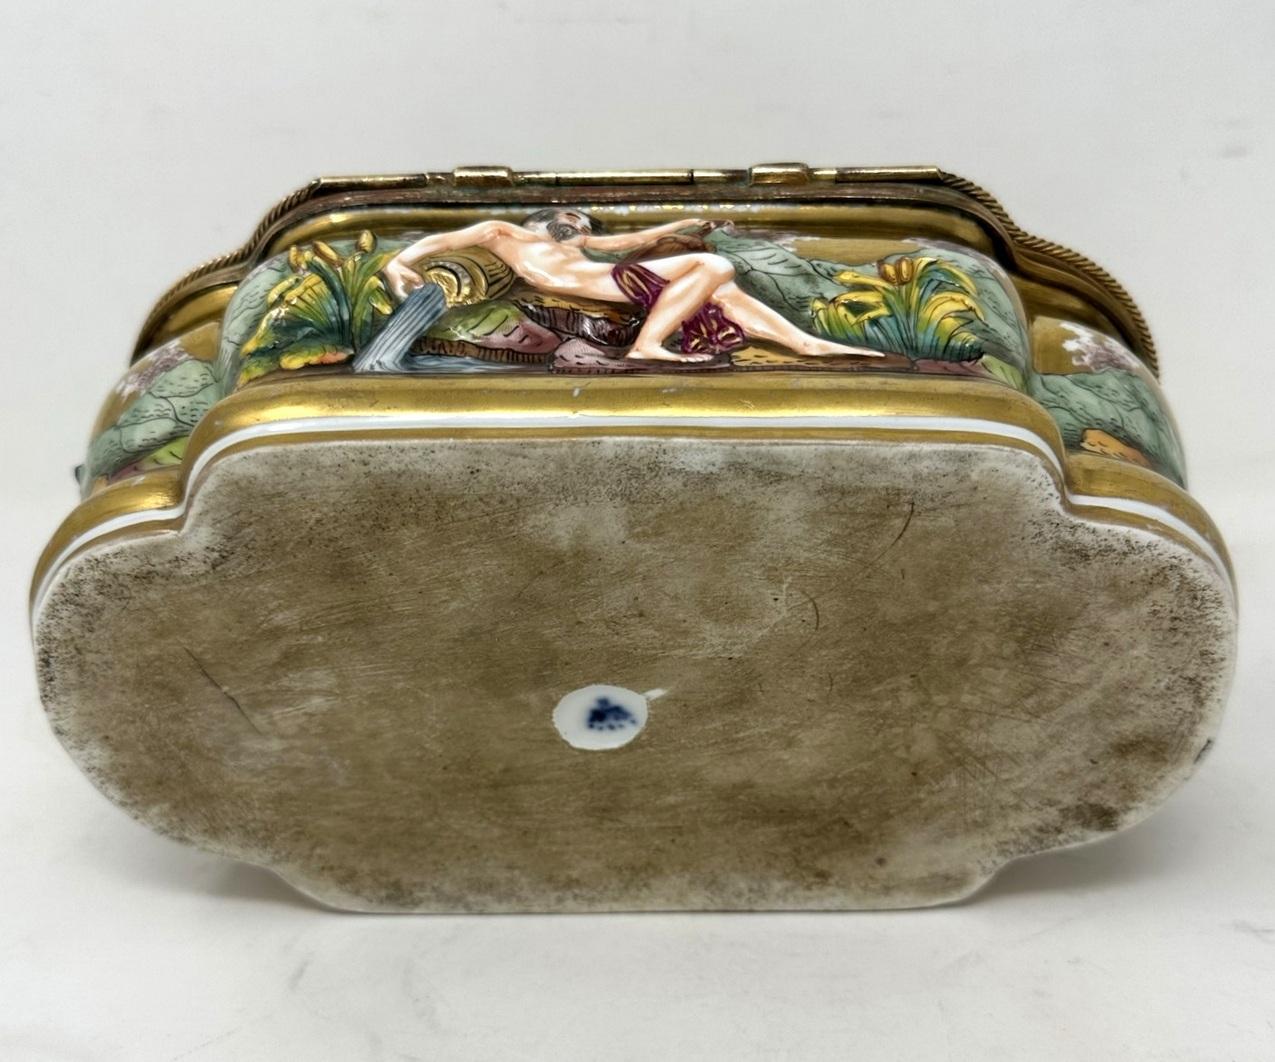 Ceramic Antique Naples Capodimonte Porcelain Gilt Mounted Jewlery Dresser or Trinket Box